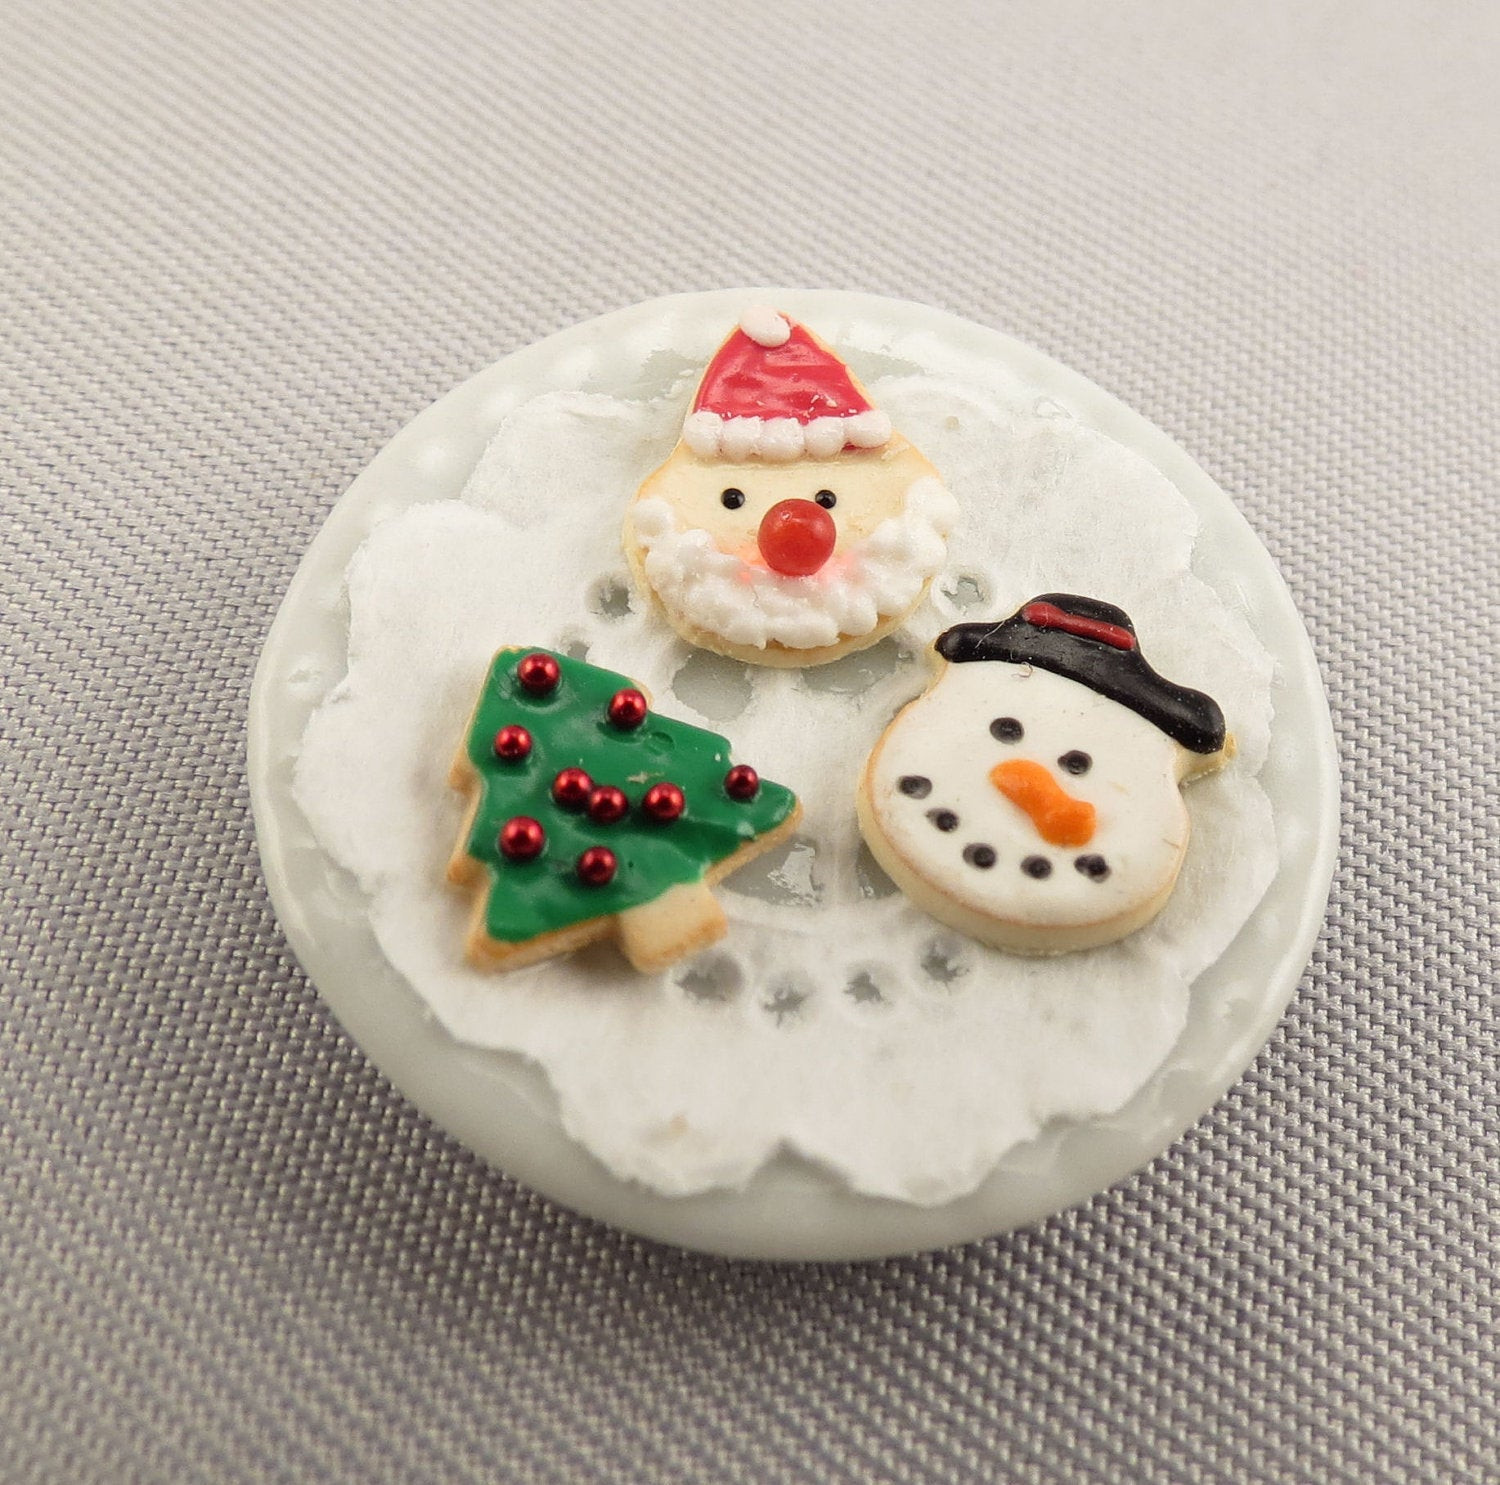 Plate Of Christmas Cookies
 Dollhouse Miniature Christmas Cookies on Plate Santa Snowman